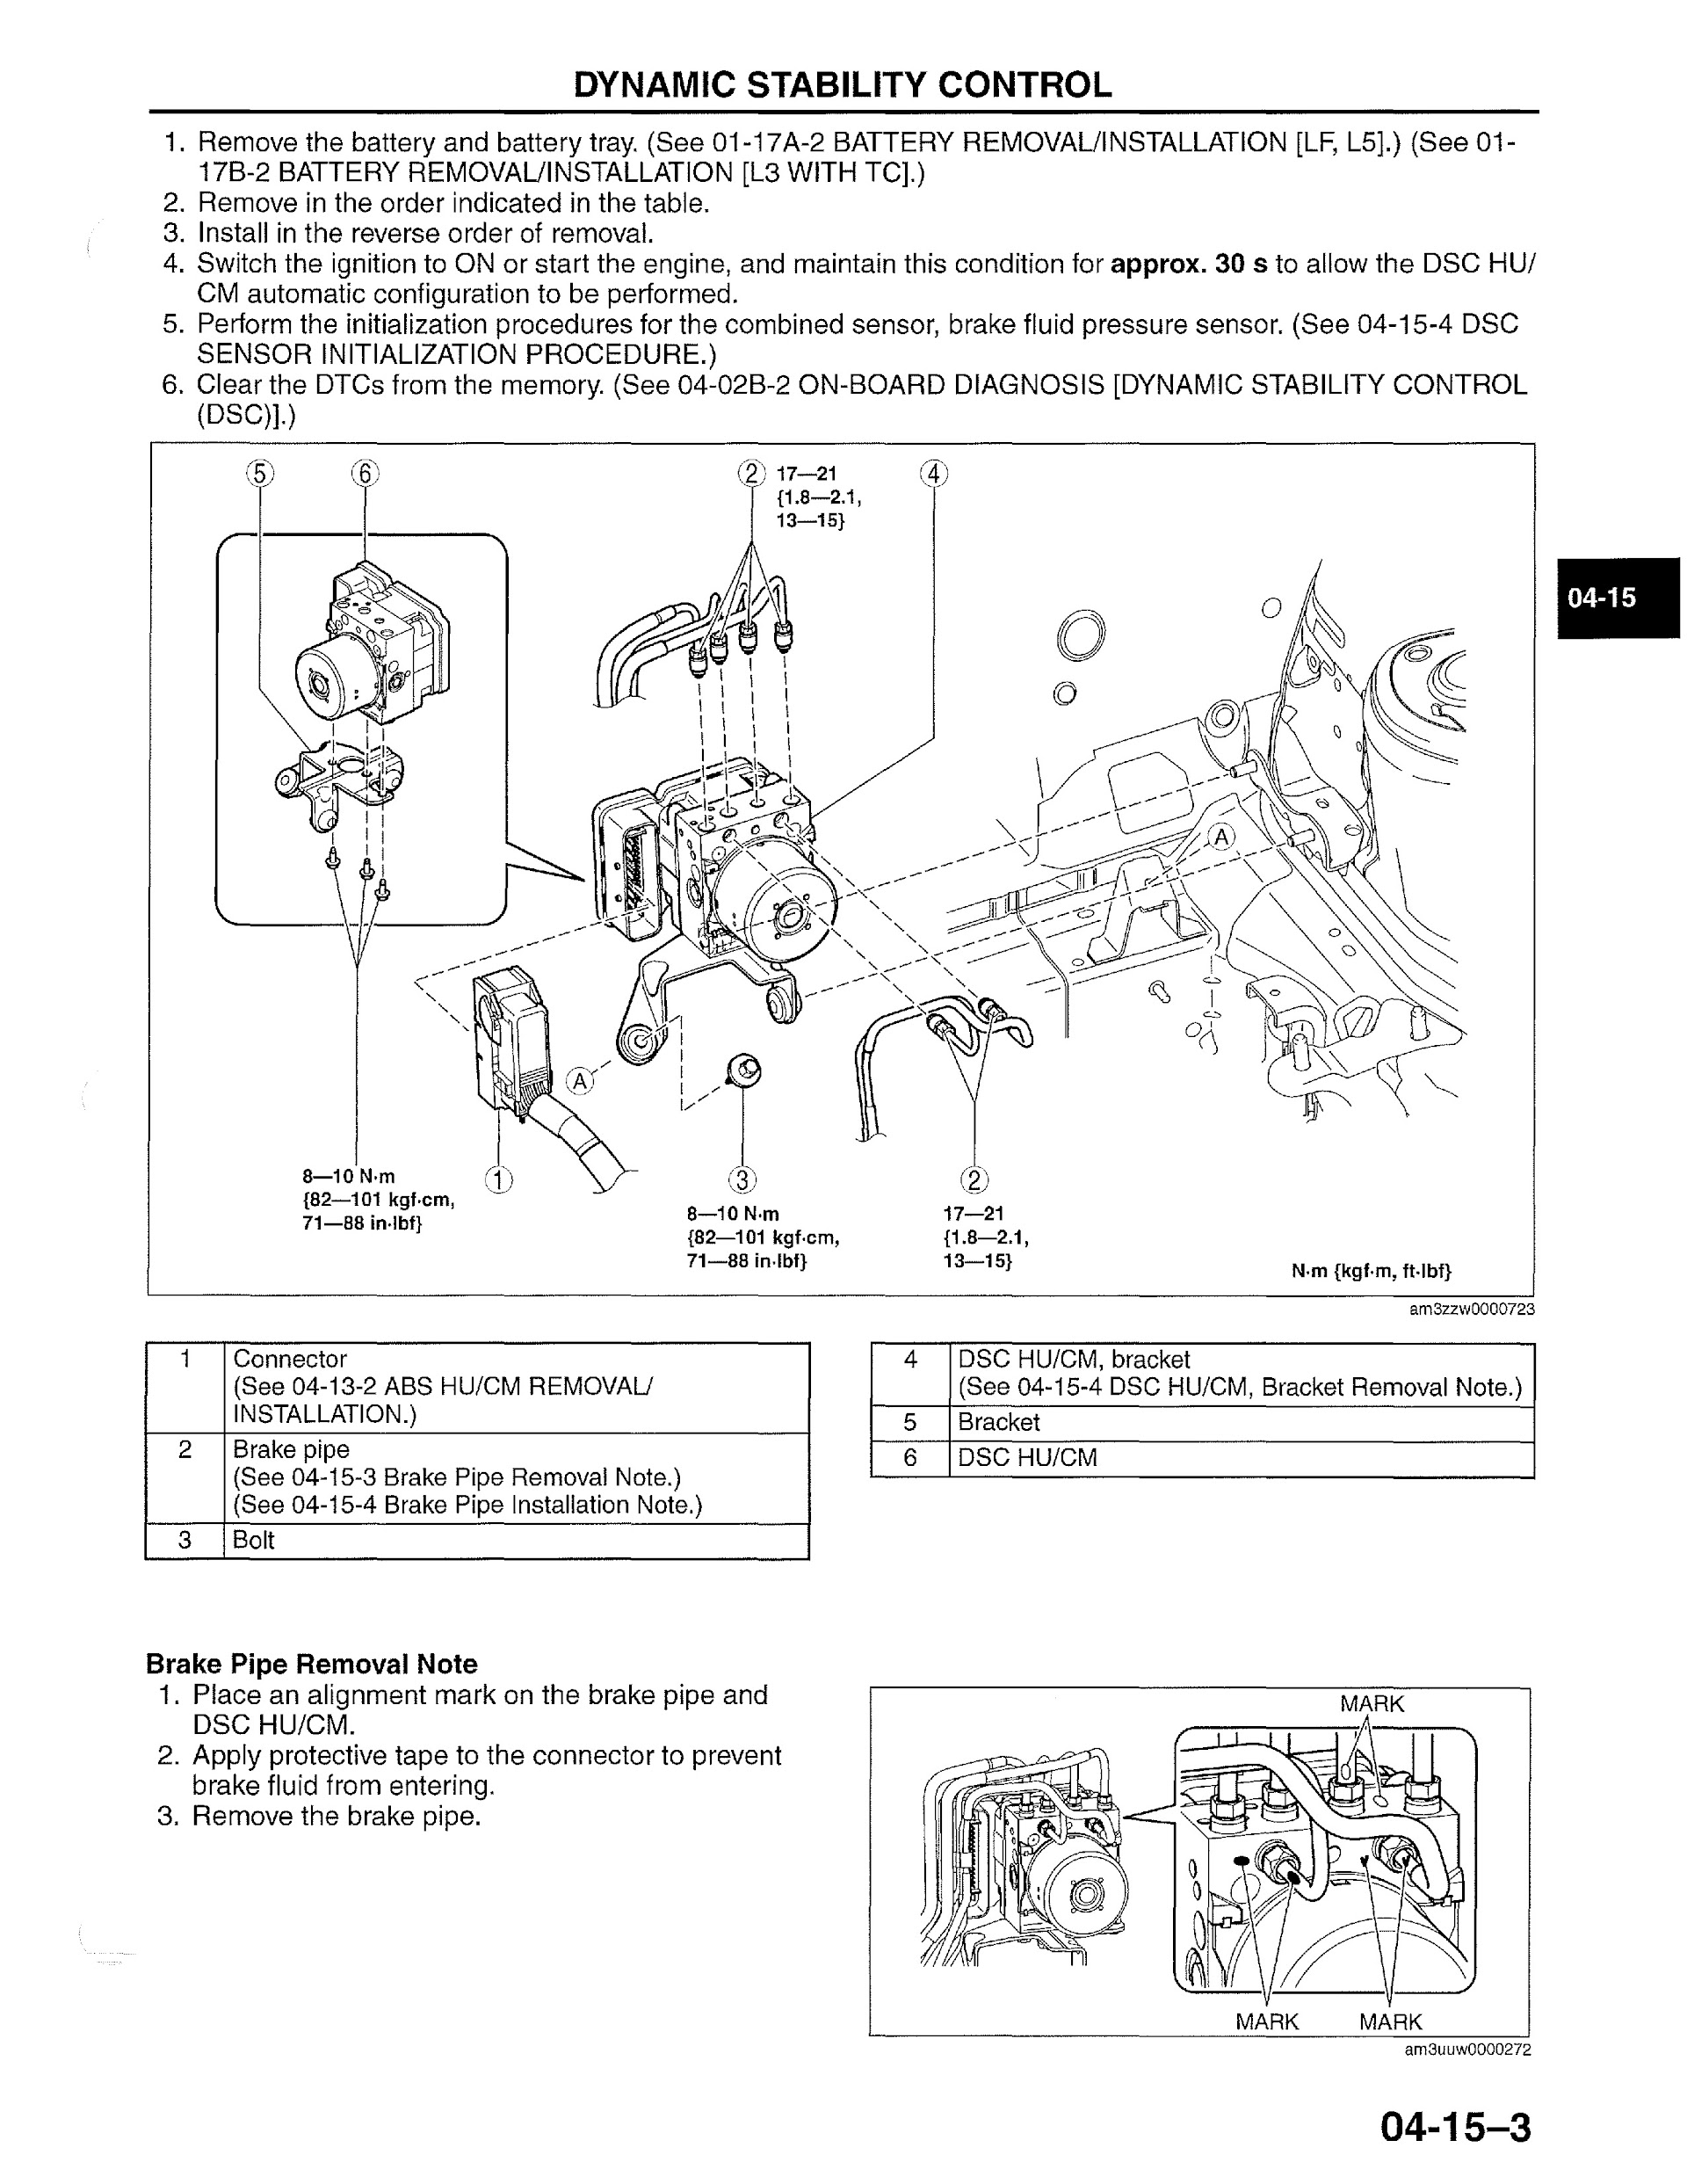 2010 mazda 3 service manual pdf free